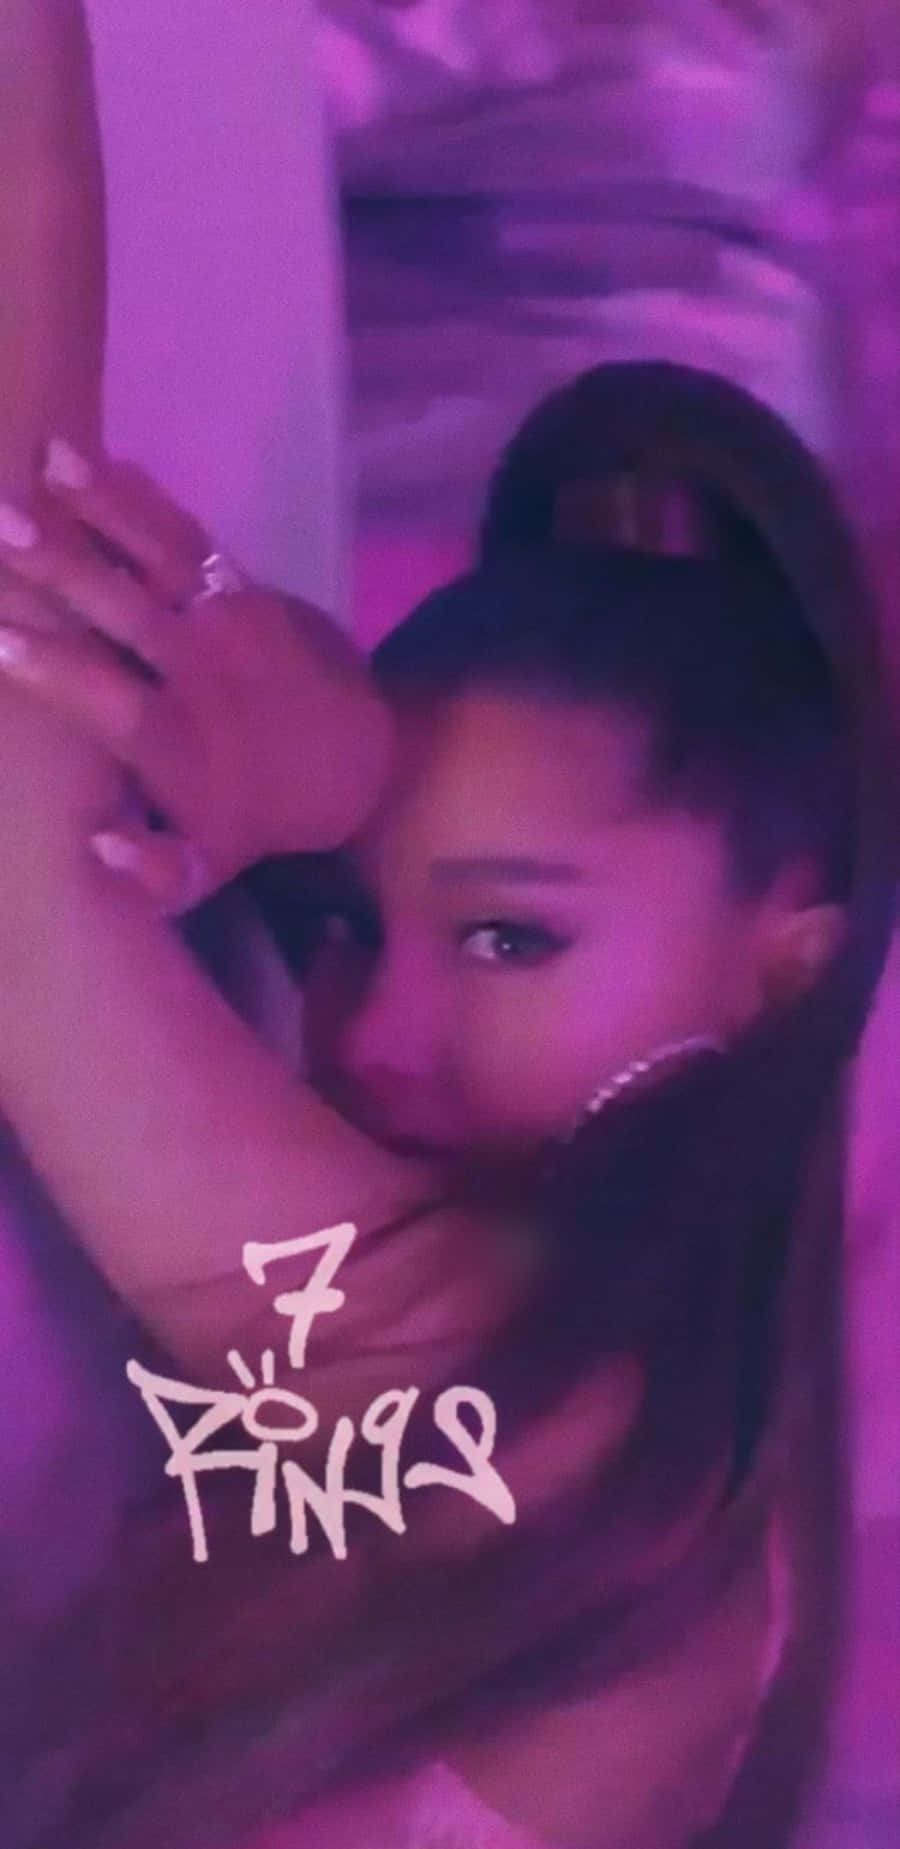 Ariana Grande 7 Ringe Musik Video Wallpaper Wallpaper